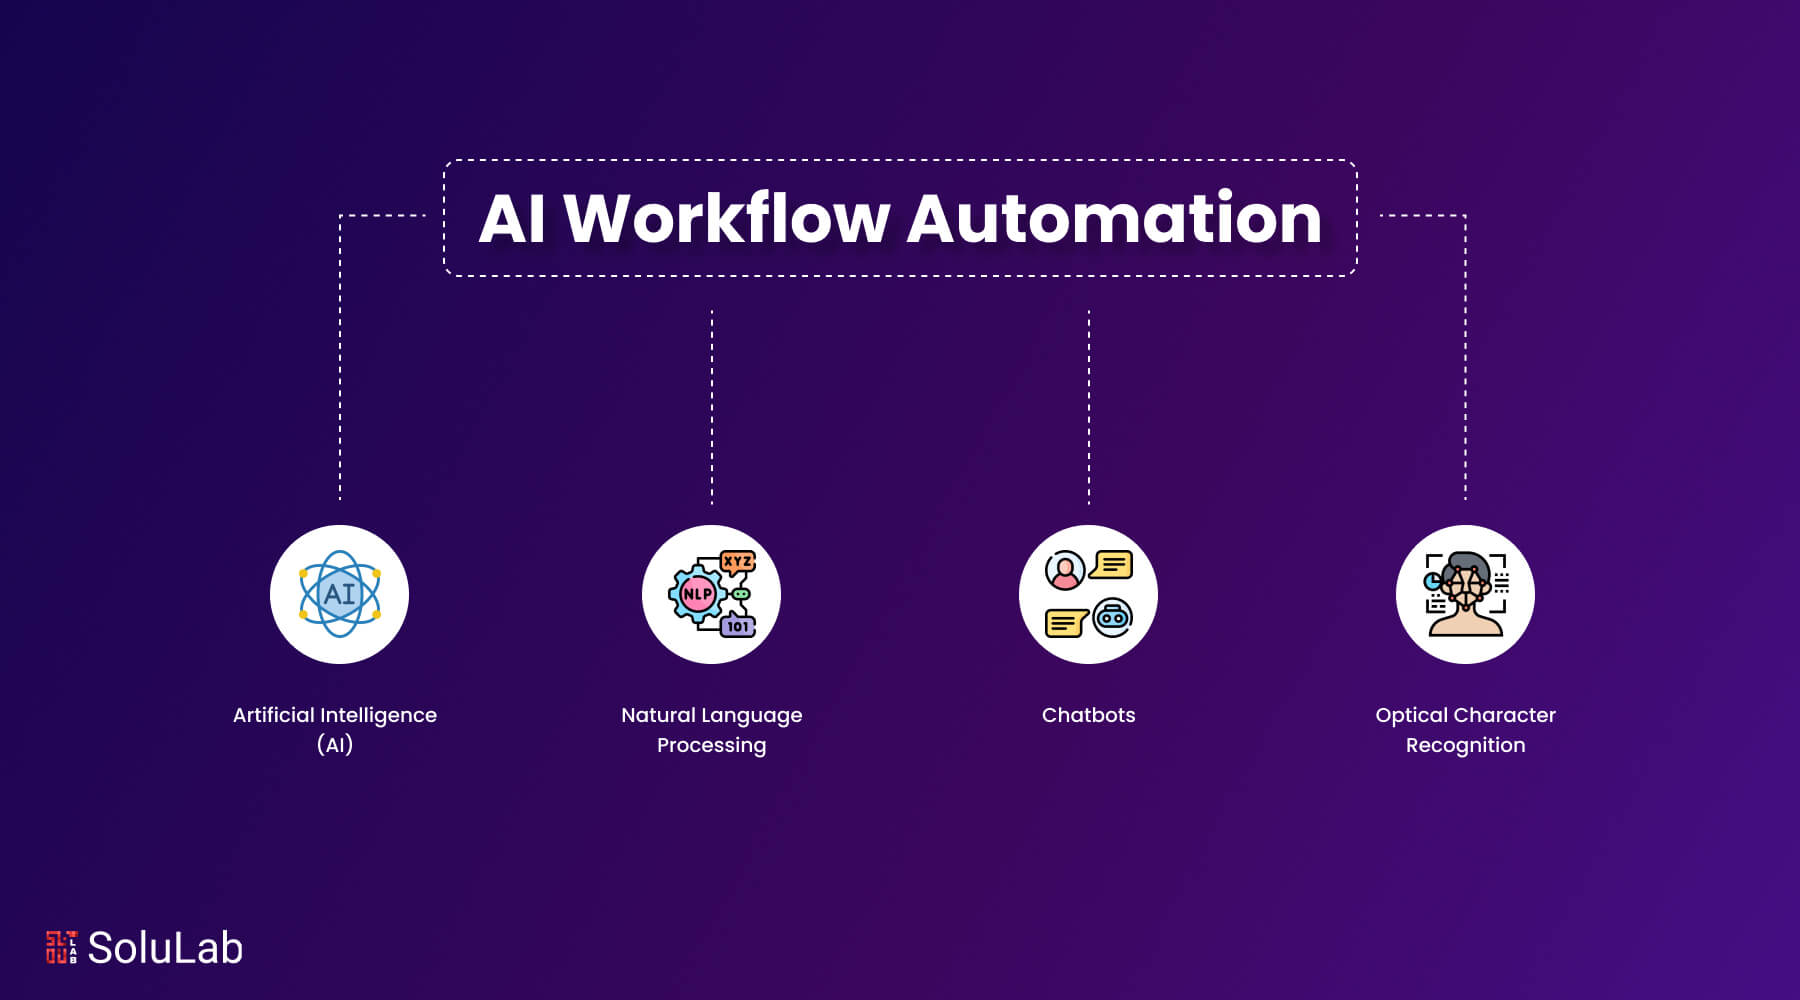 AI Workflow Automation